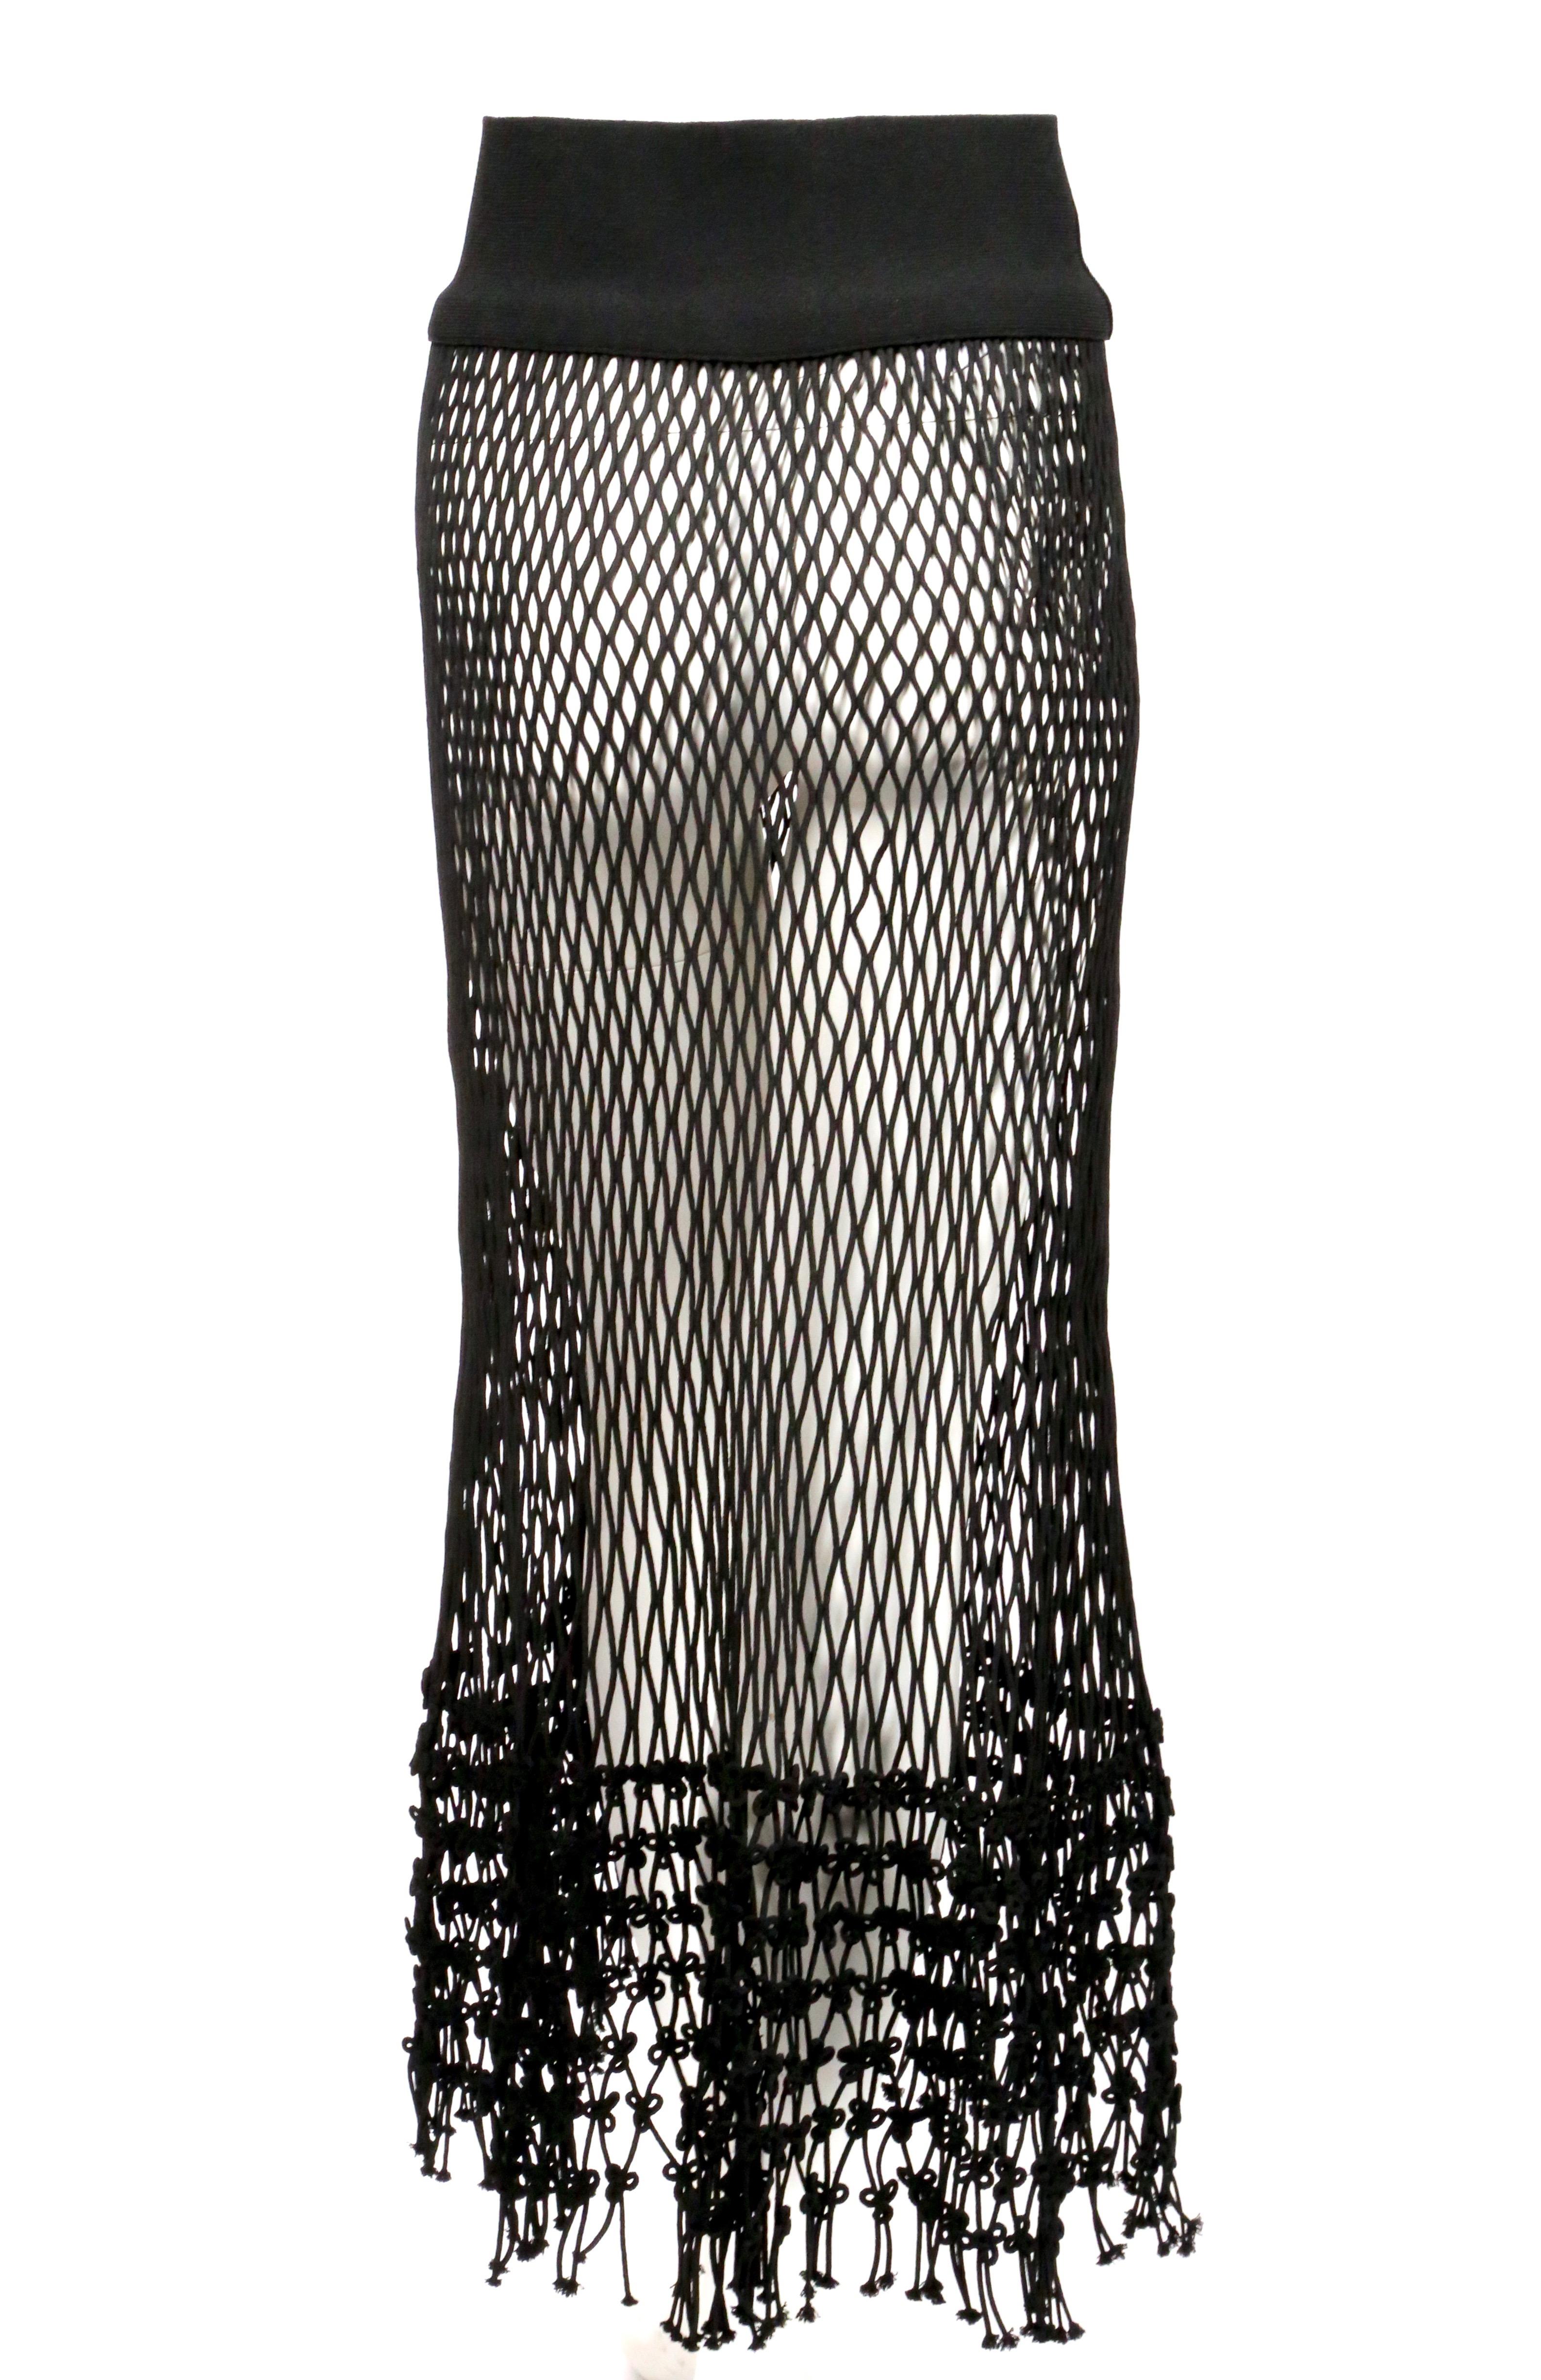 2014 CELINE by PHOEBE PHILO black net runway skirt - new 1